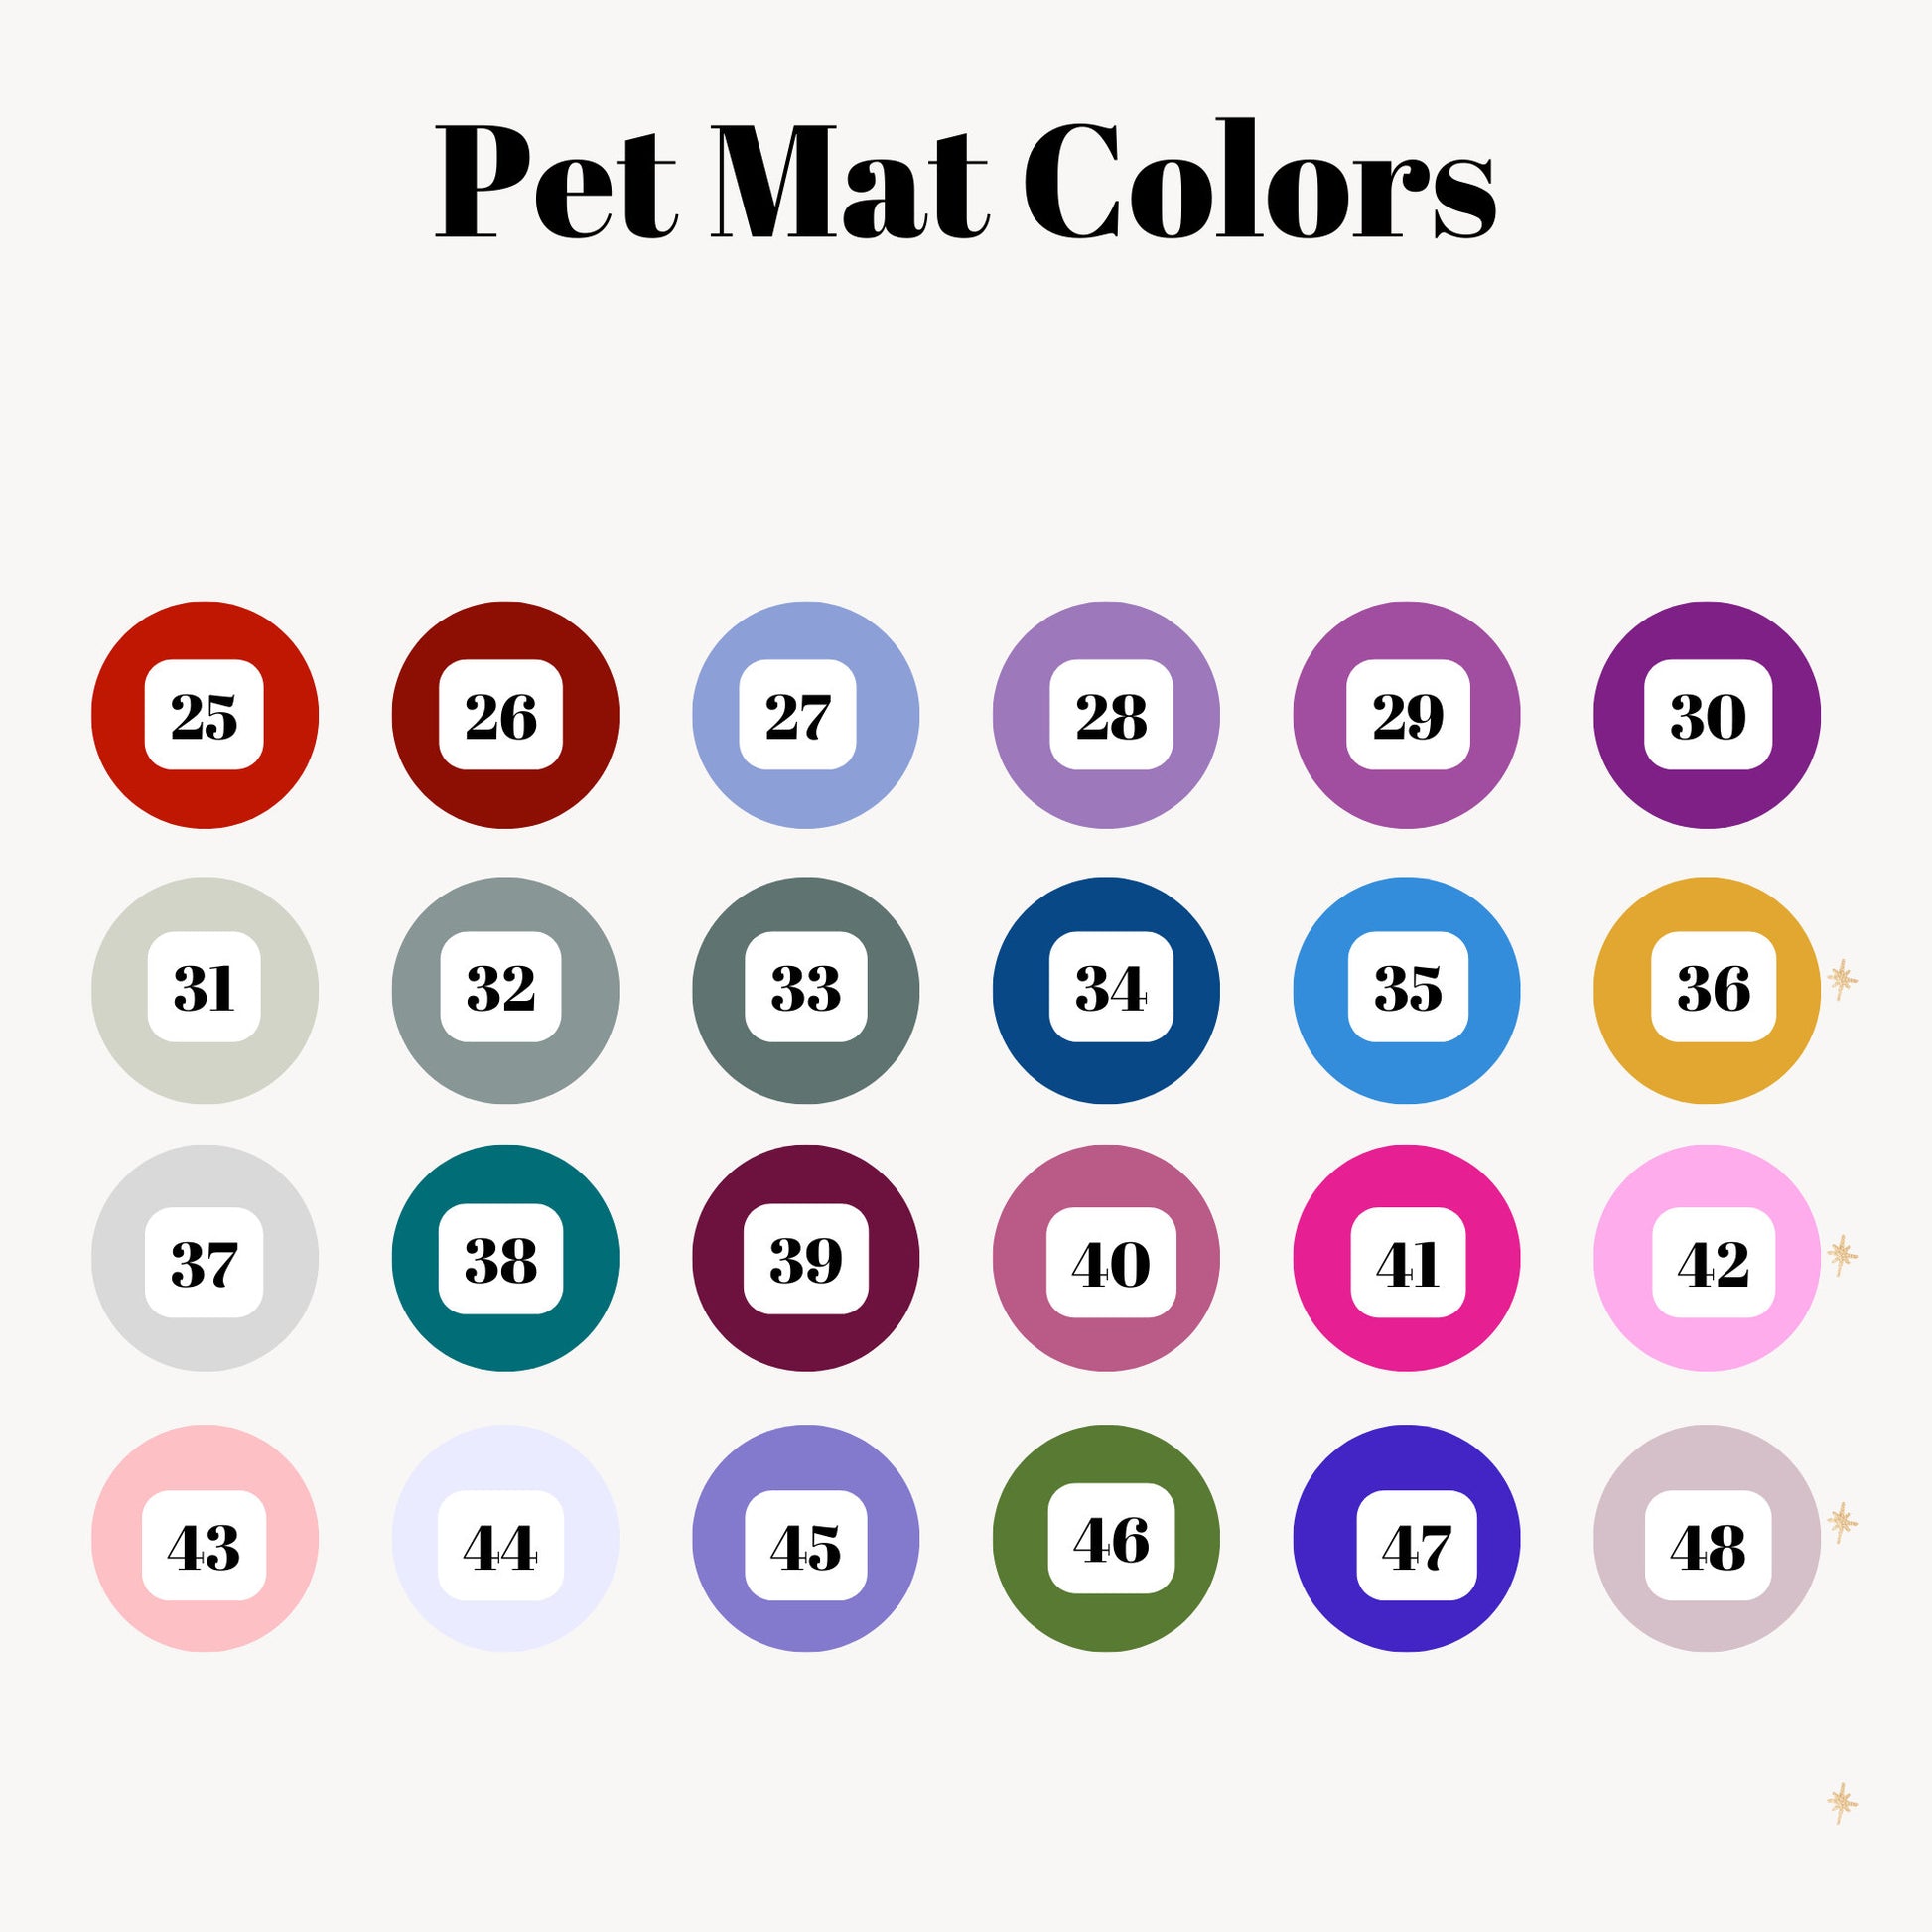 Personalized Dog Food Mat, Dog Mats Using Pet Photo Name, Custom Dog Bowl Mat, Personalized Dog Feeding Mat, New Pet Gift, Dog Lover Gift